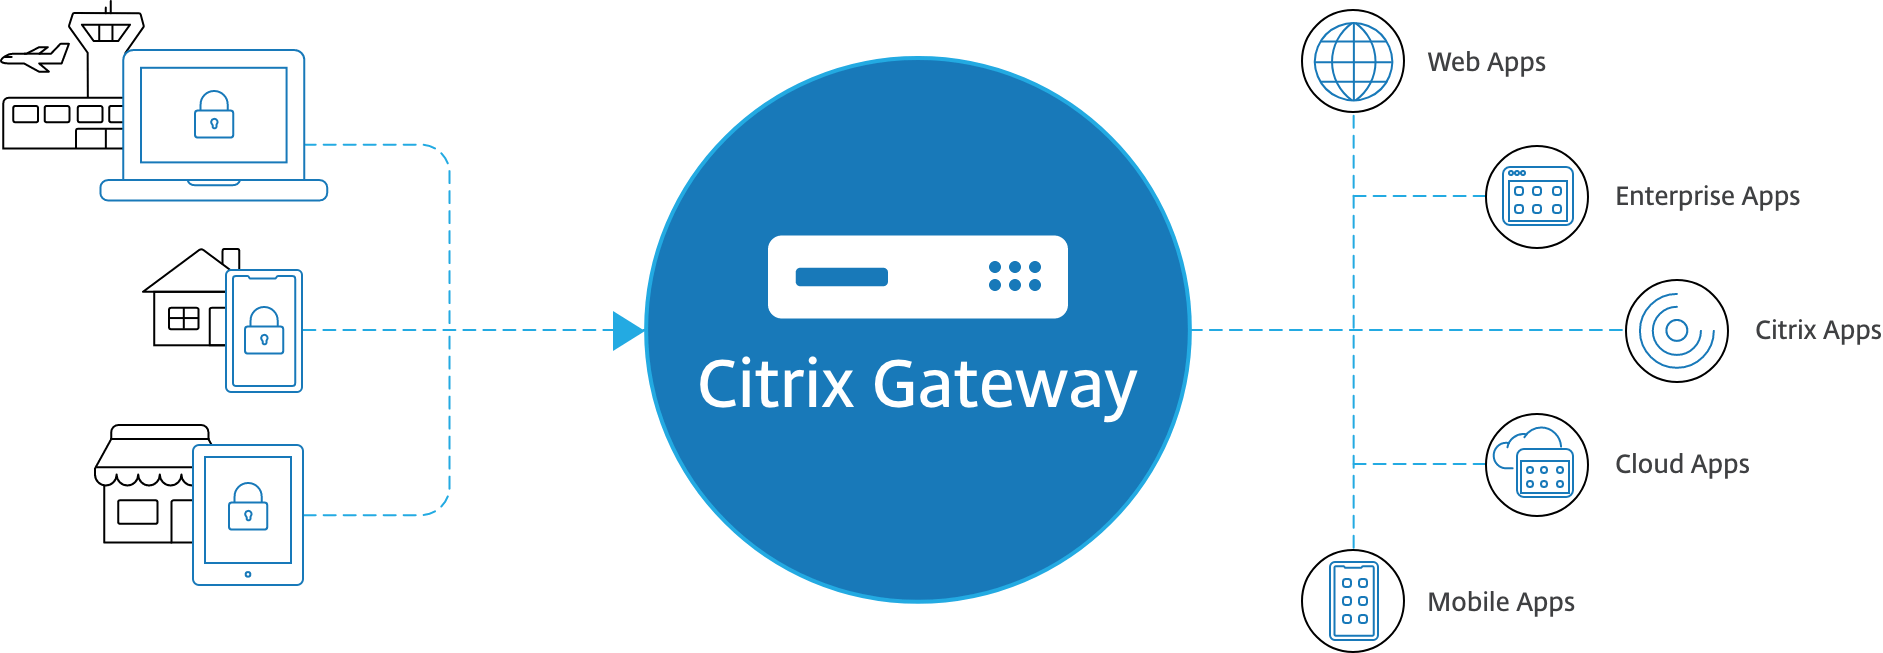 citrix-gateway-product-breakdown